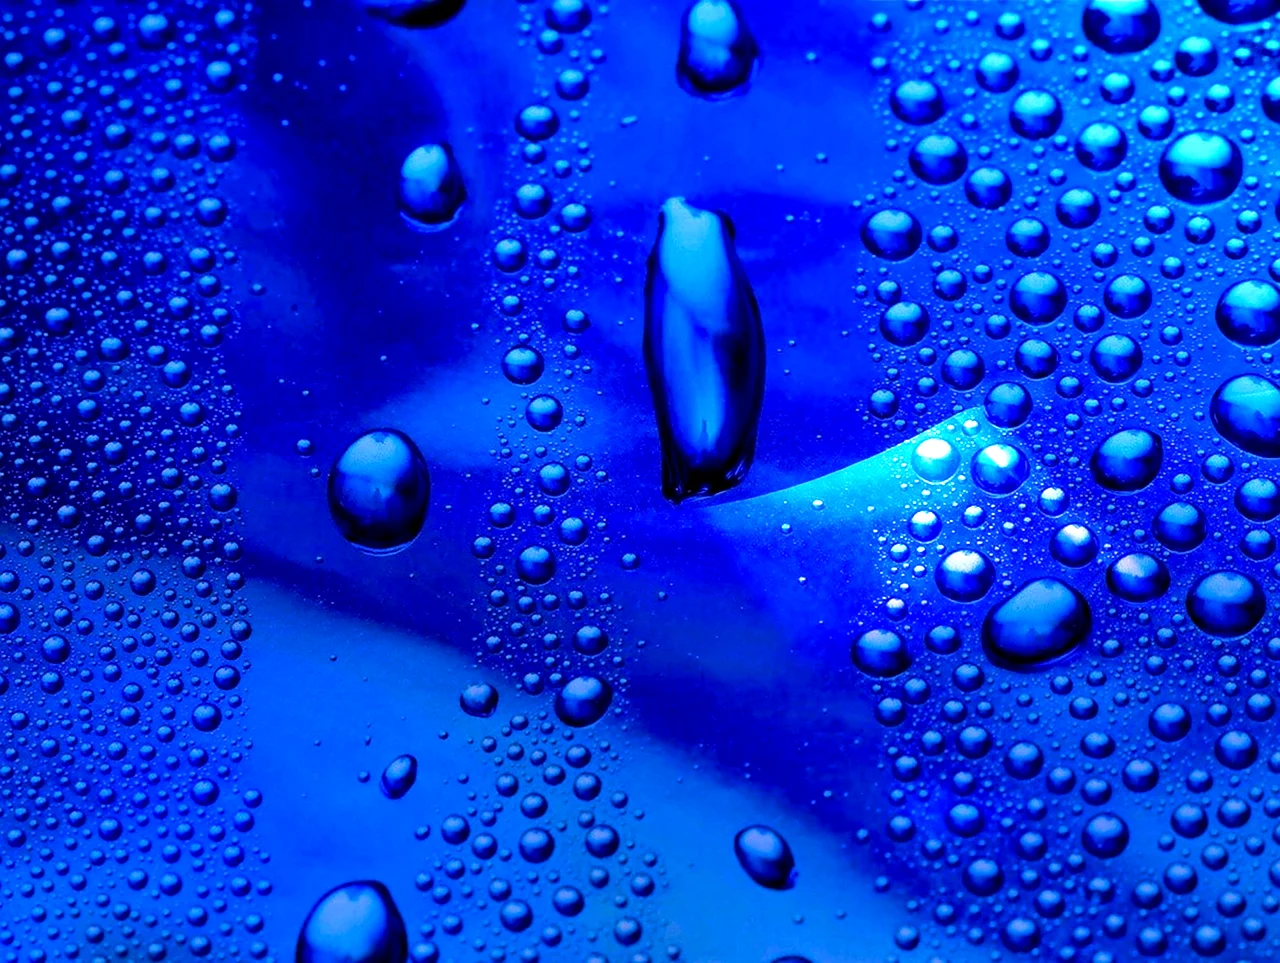 Капли дождя на синем фоне